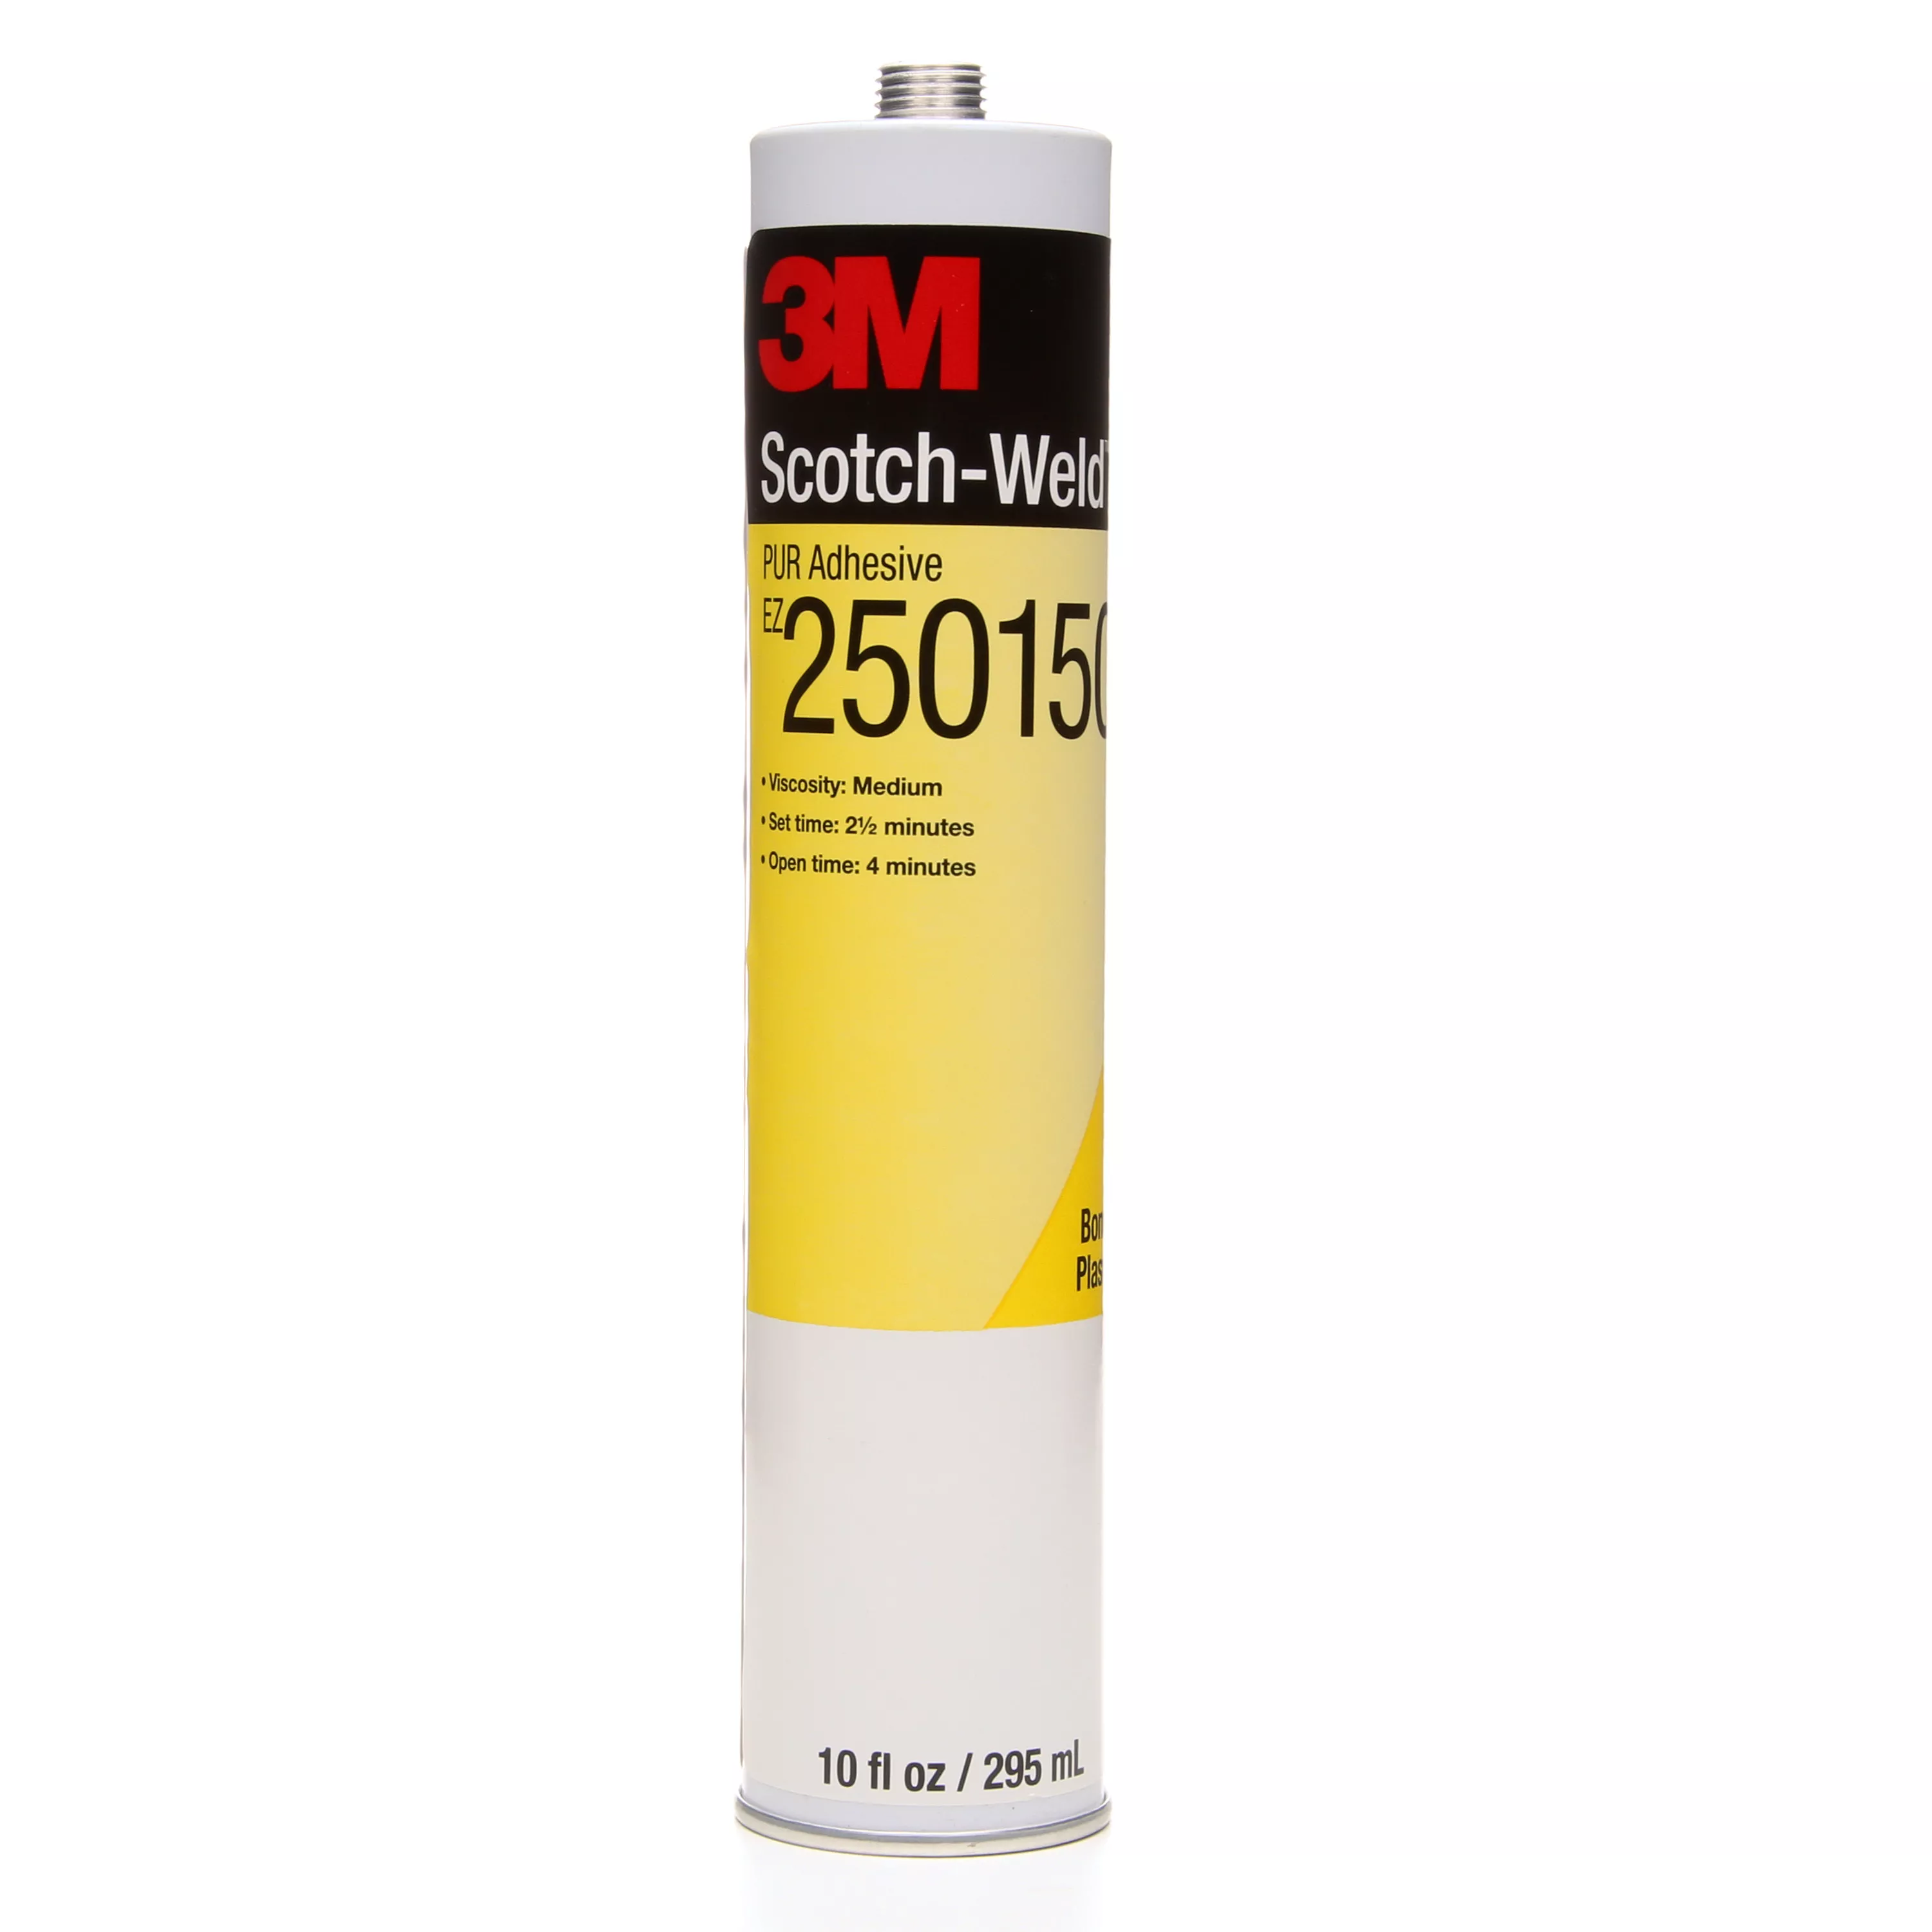 3M™ Scotch-Weld™ PUR Adhesive EZ250150, Off-White, 1/10 Gallon Cartidge,
5 Each/Case